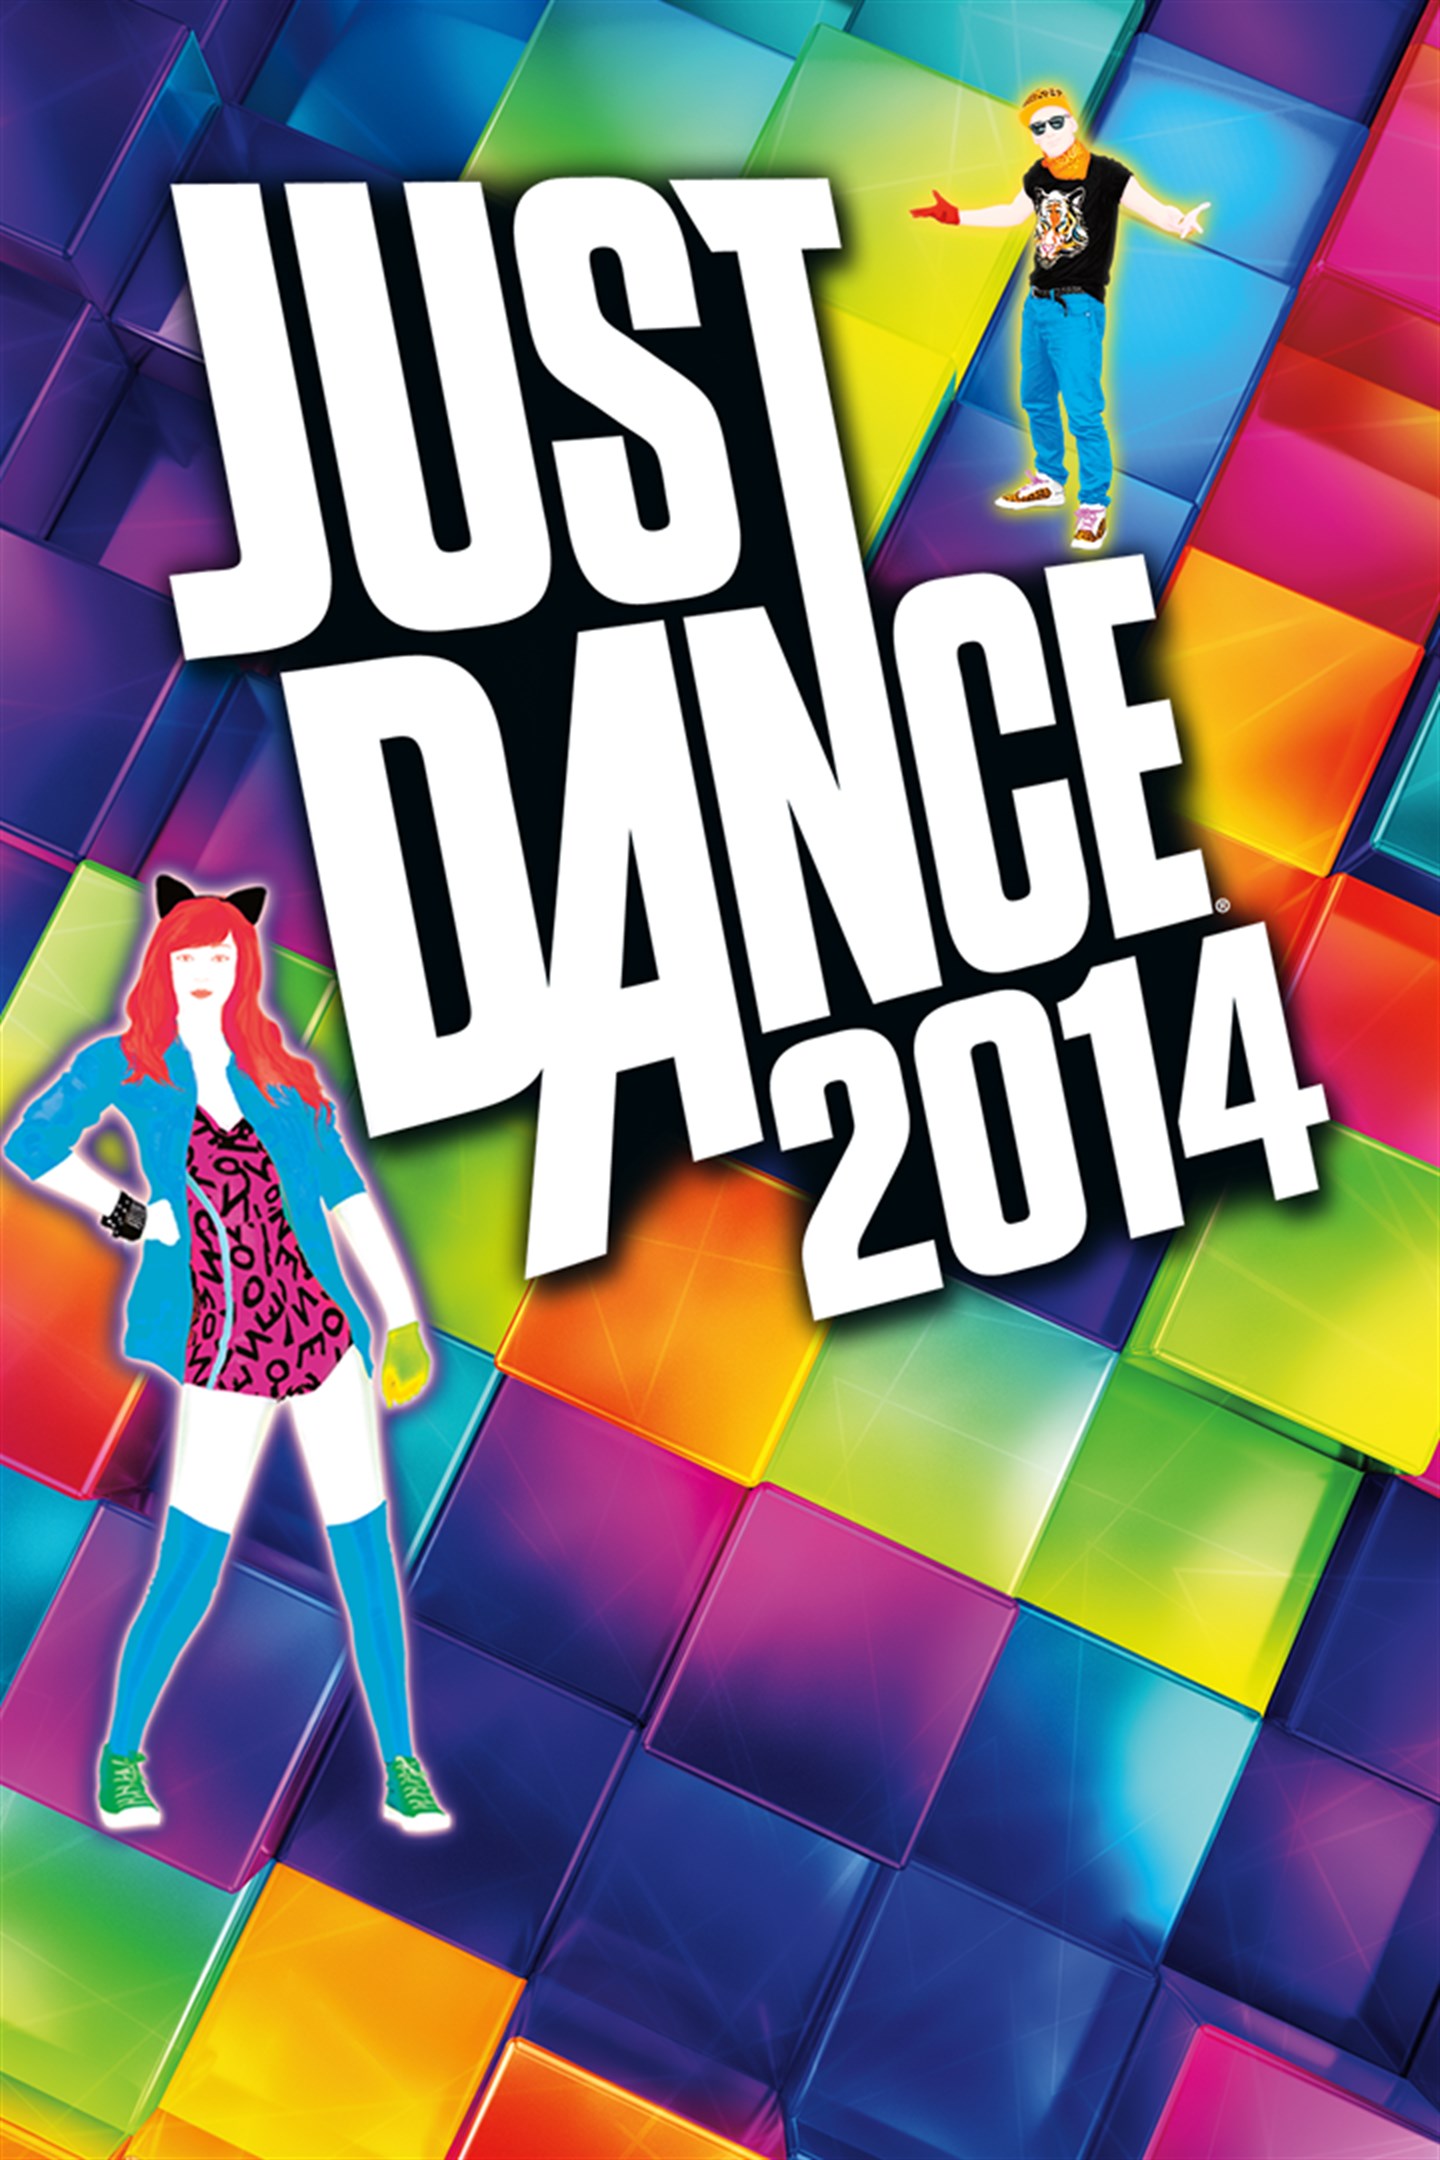 Just Dance 2014 (2013)